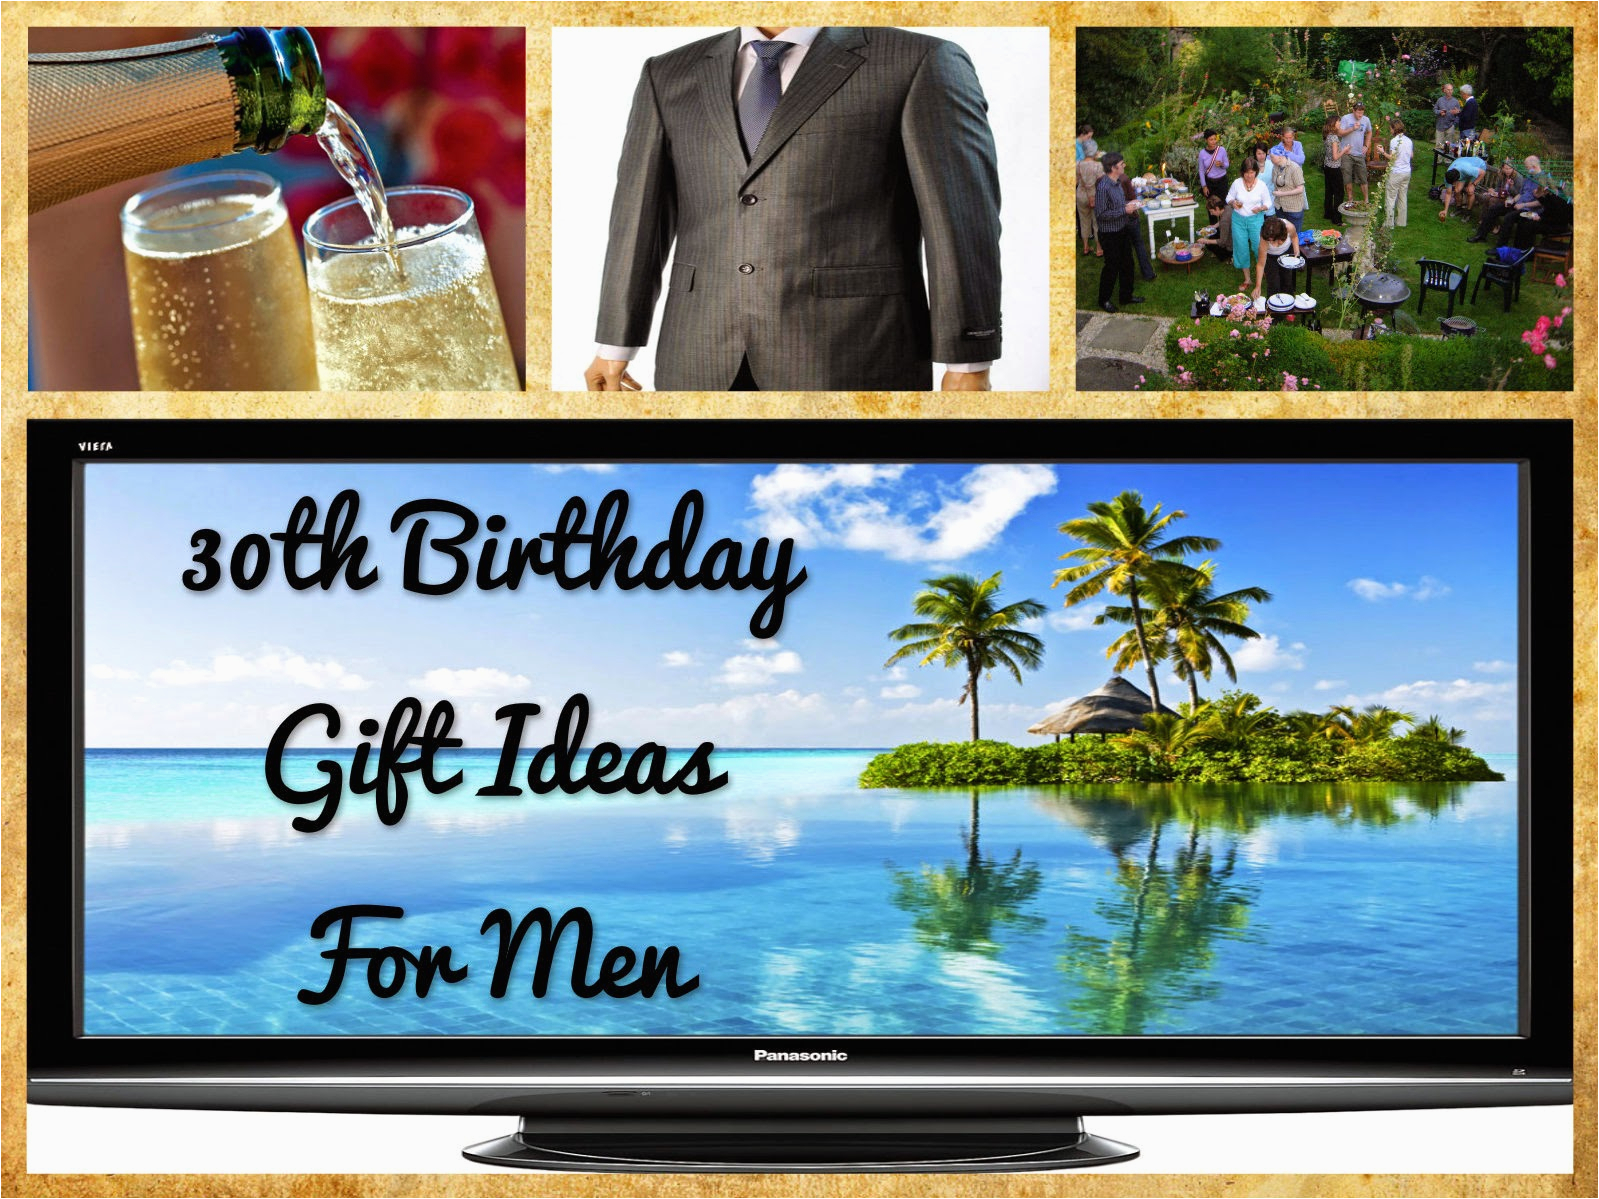 30th birthday gift ideas for men